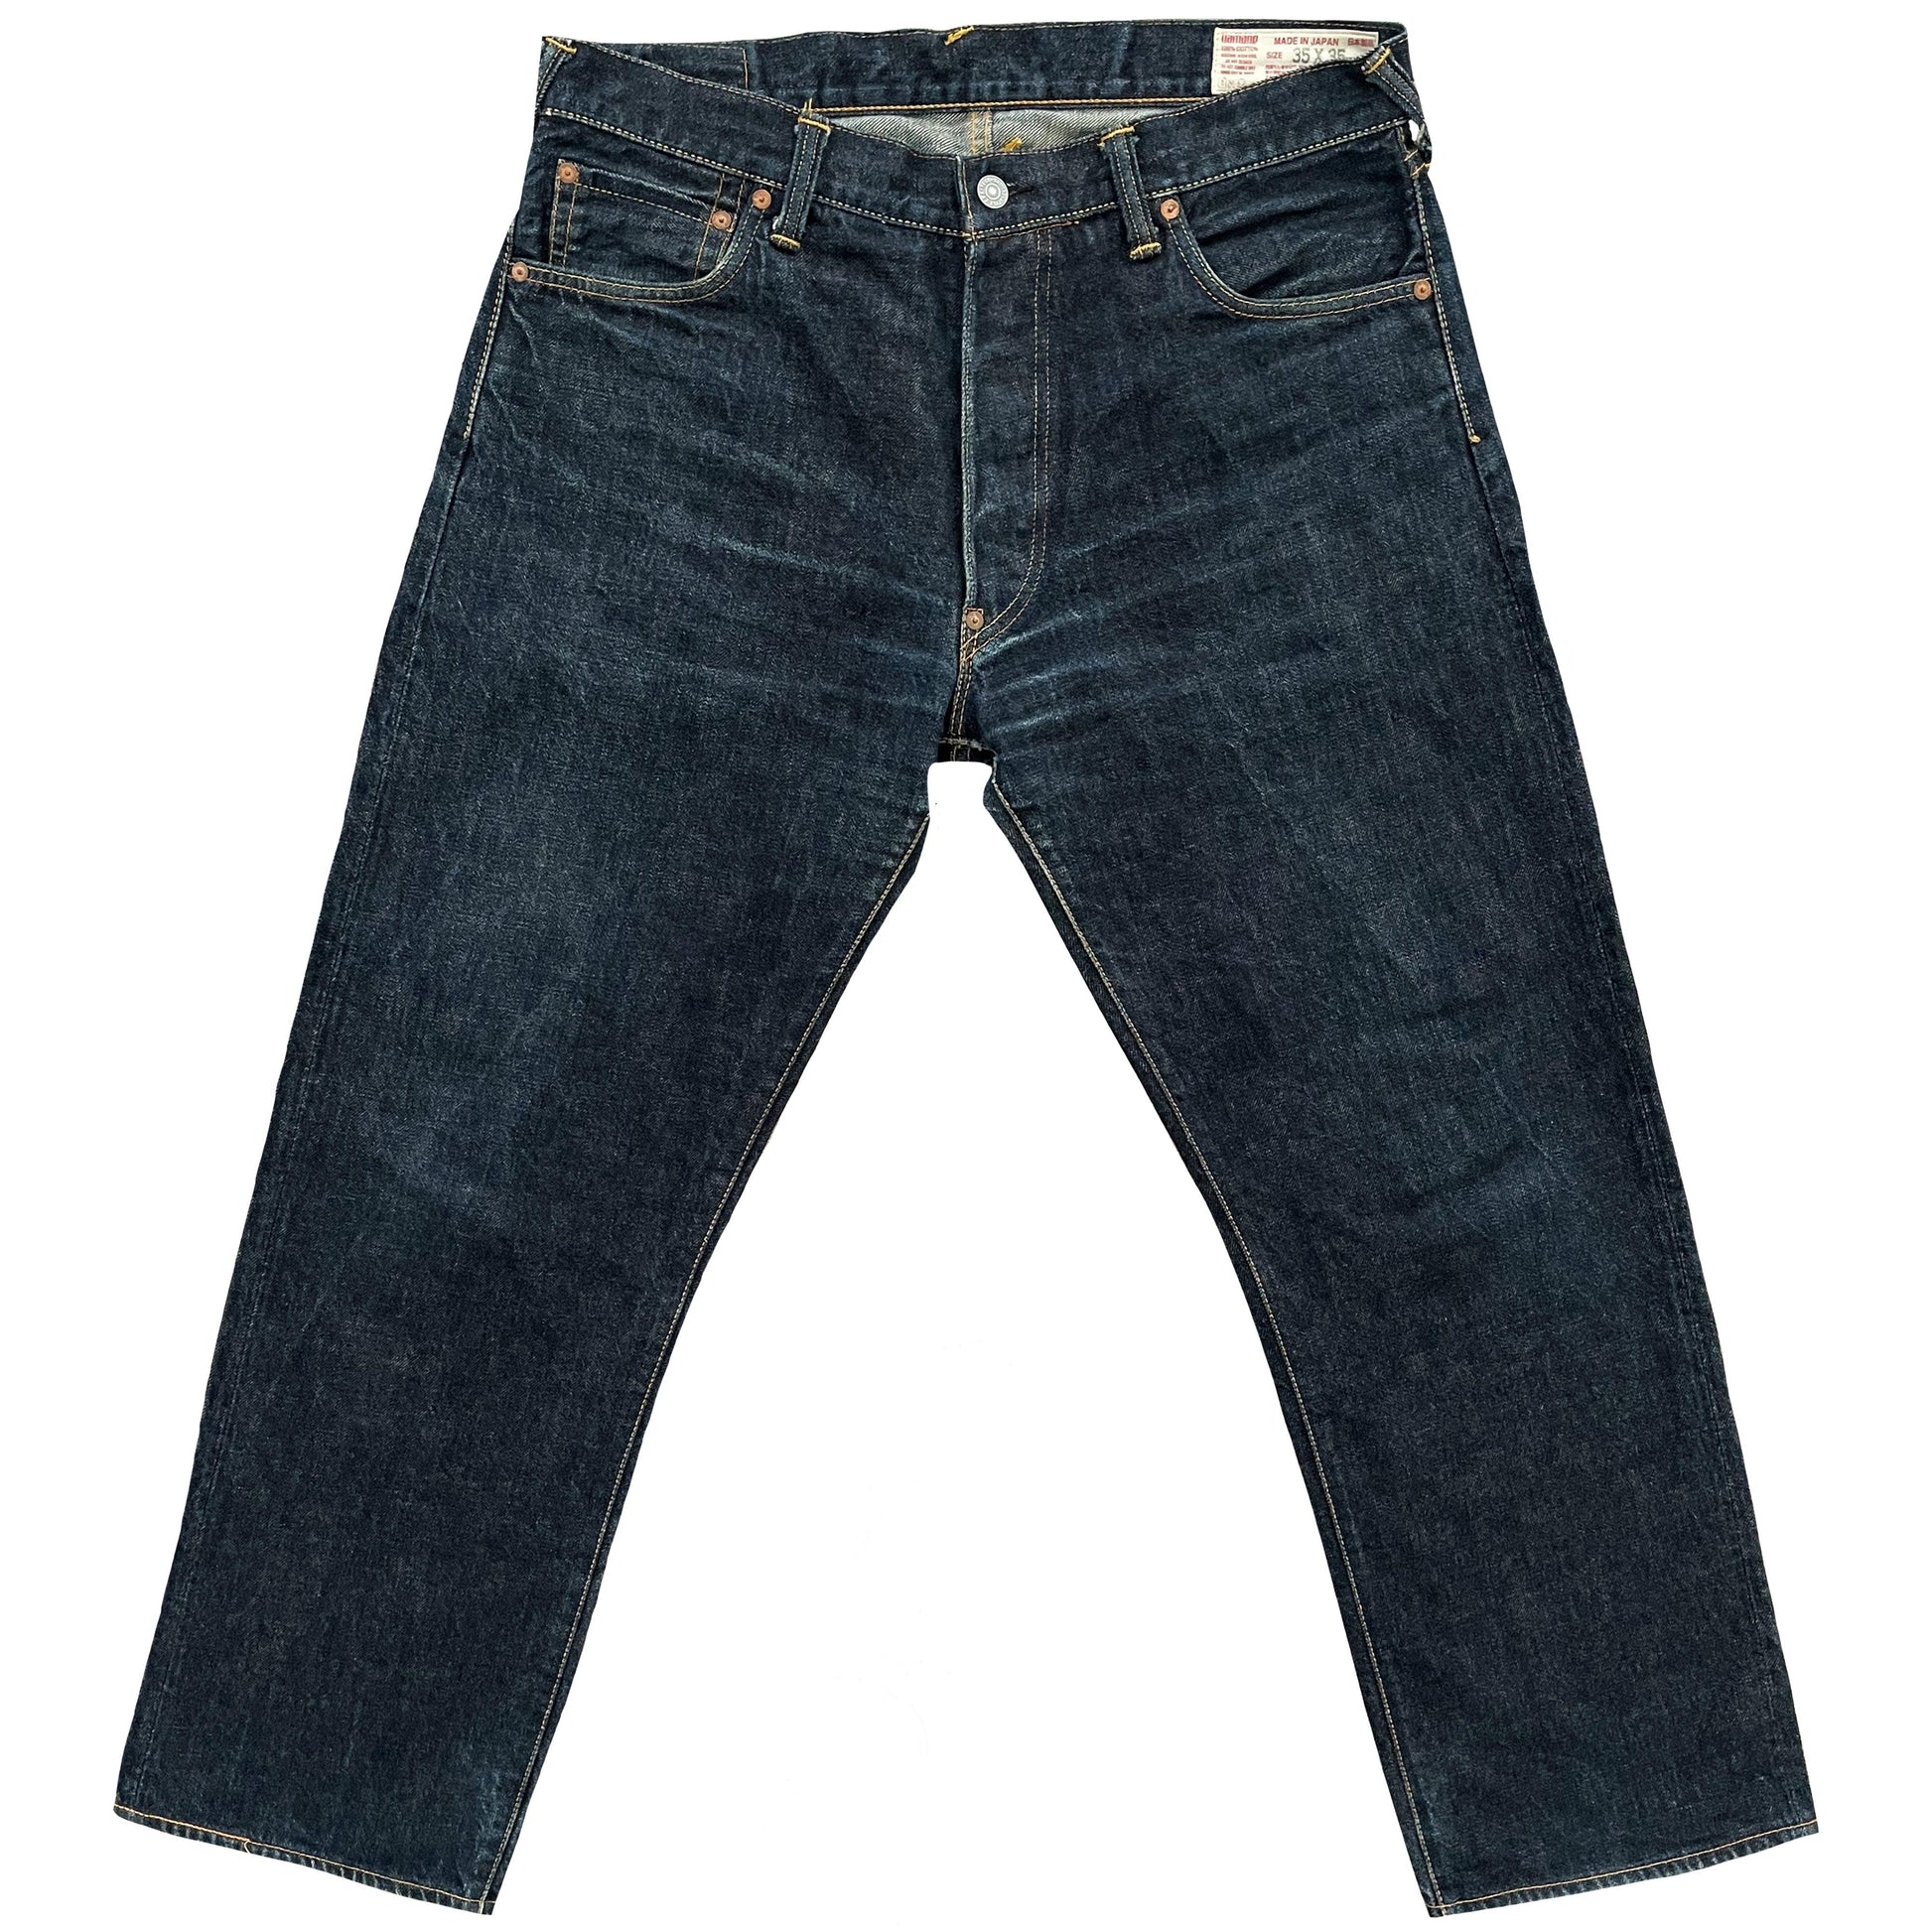 Evisu Blue Daicock Jeans - Known Source